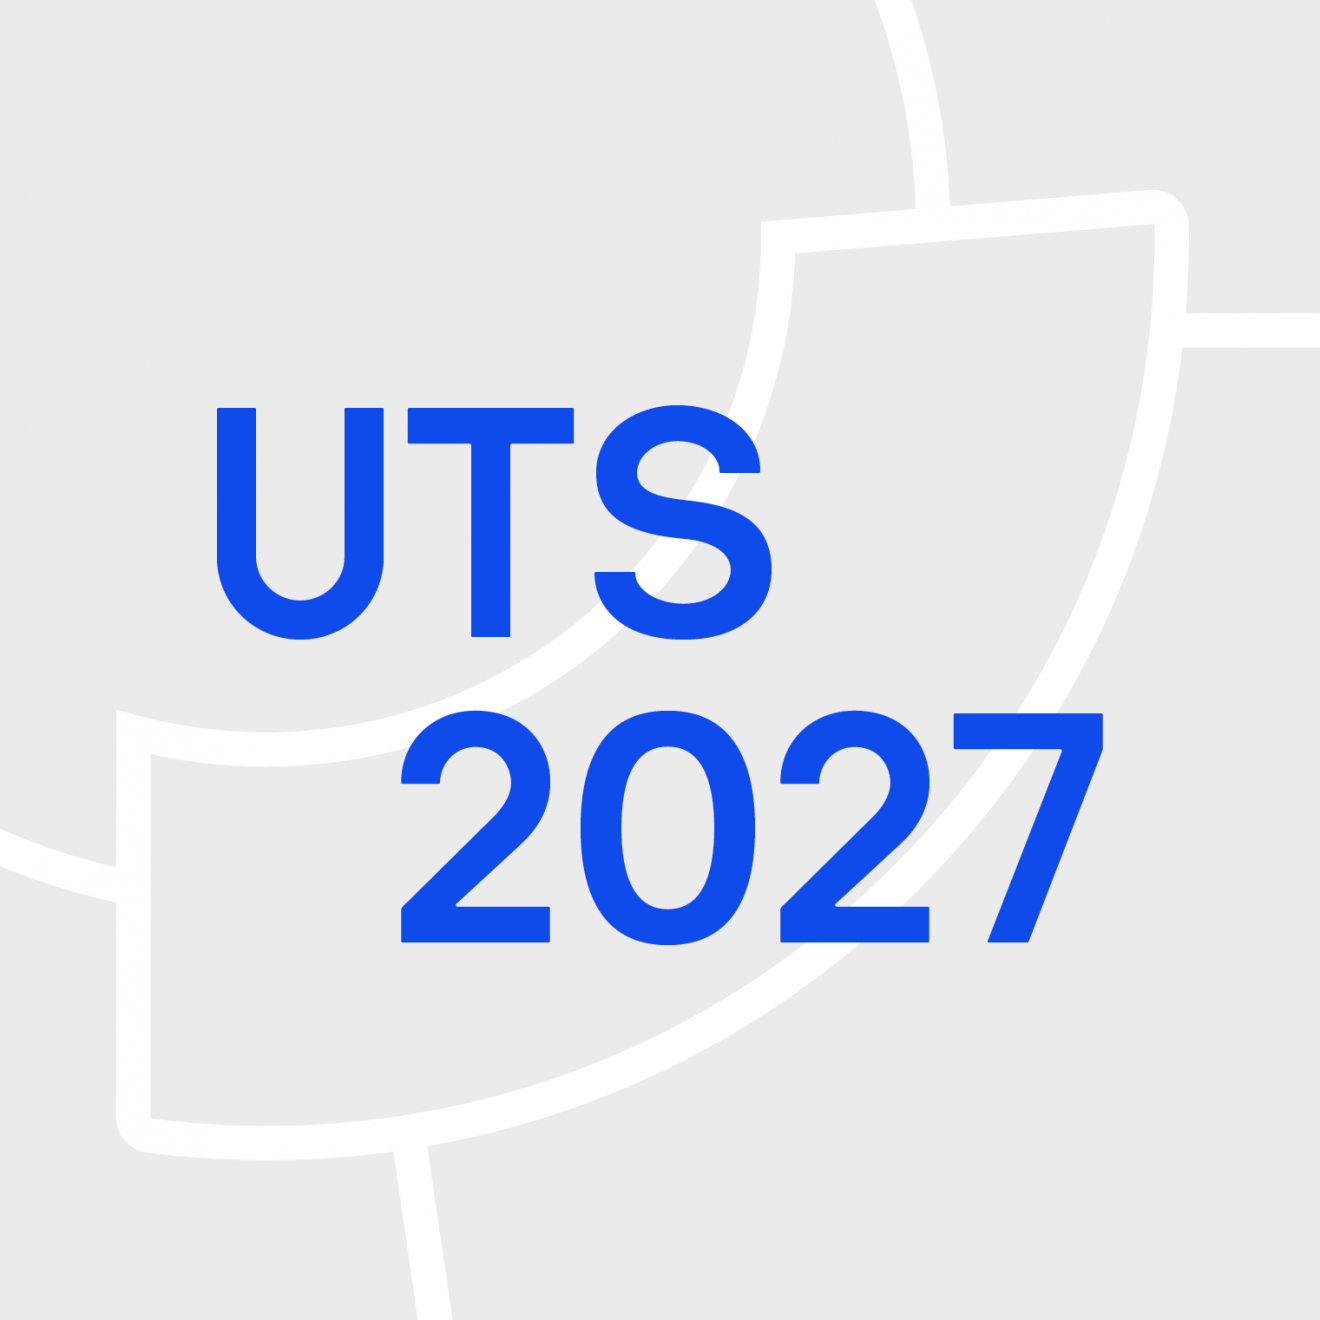 UTS 2027